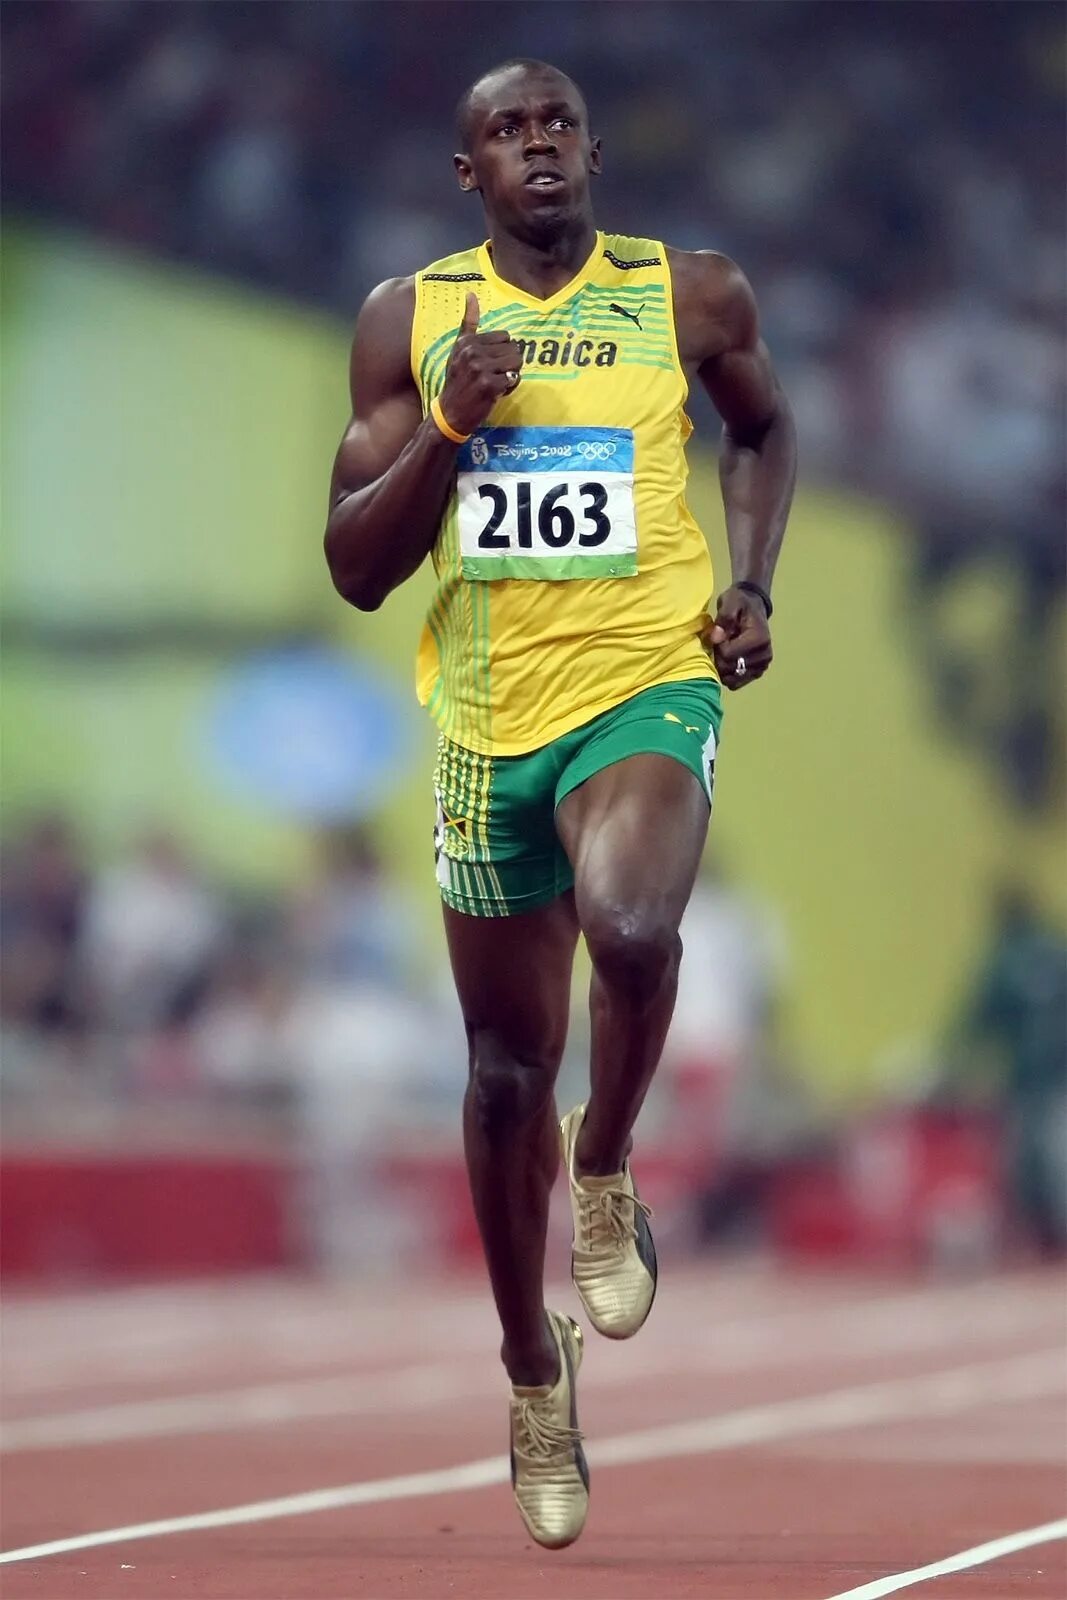 Бегун рекордсмен чемпион. Усейн болт 100 метров. Усейн болт 2008. Усэйн болт рекорд 100 метров. Усейн болт в 2007.